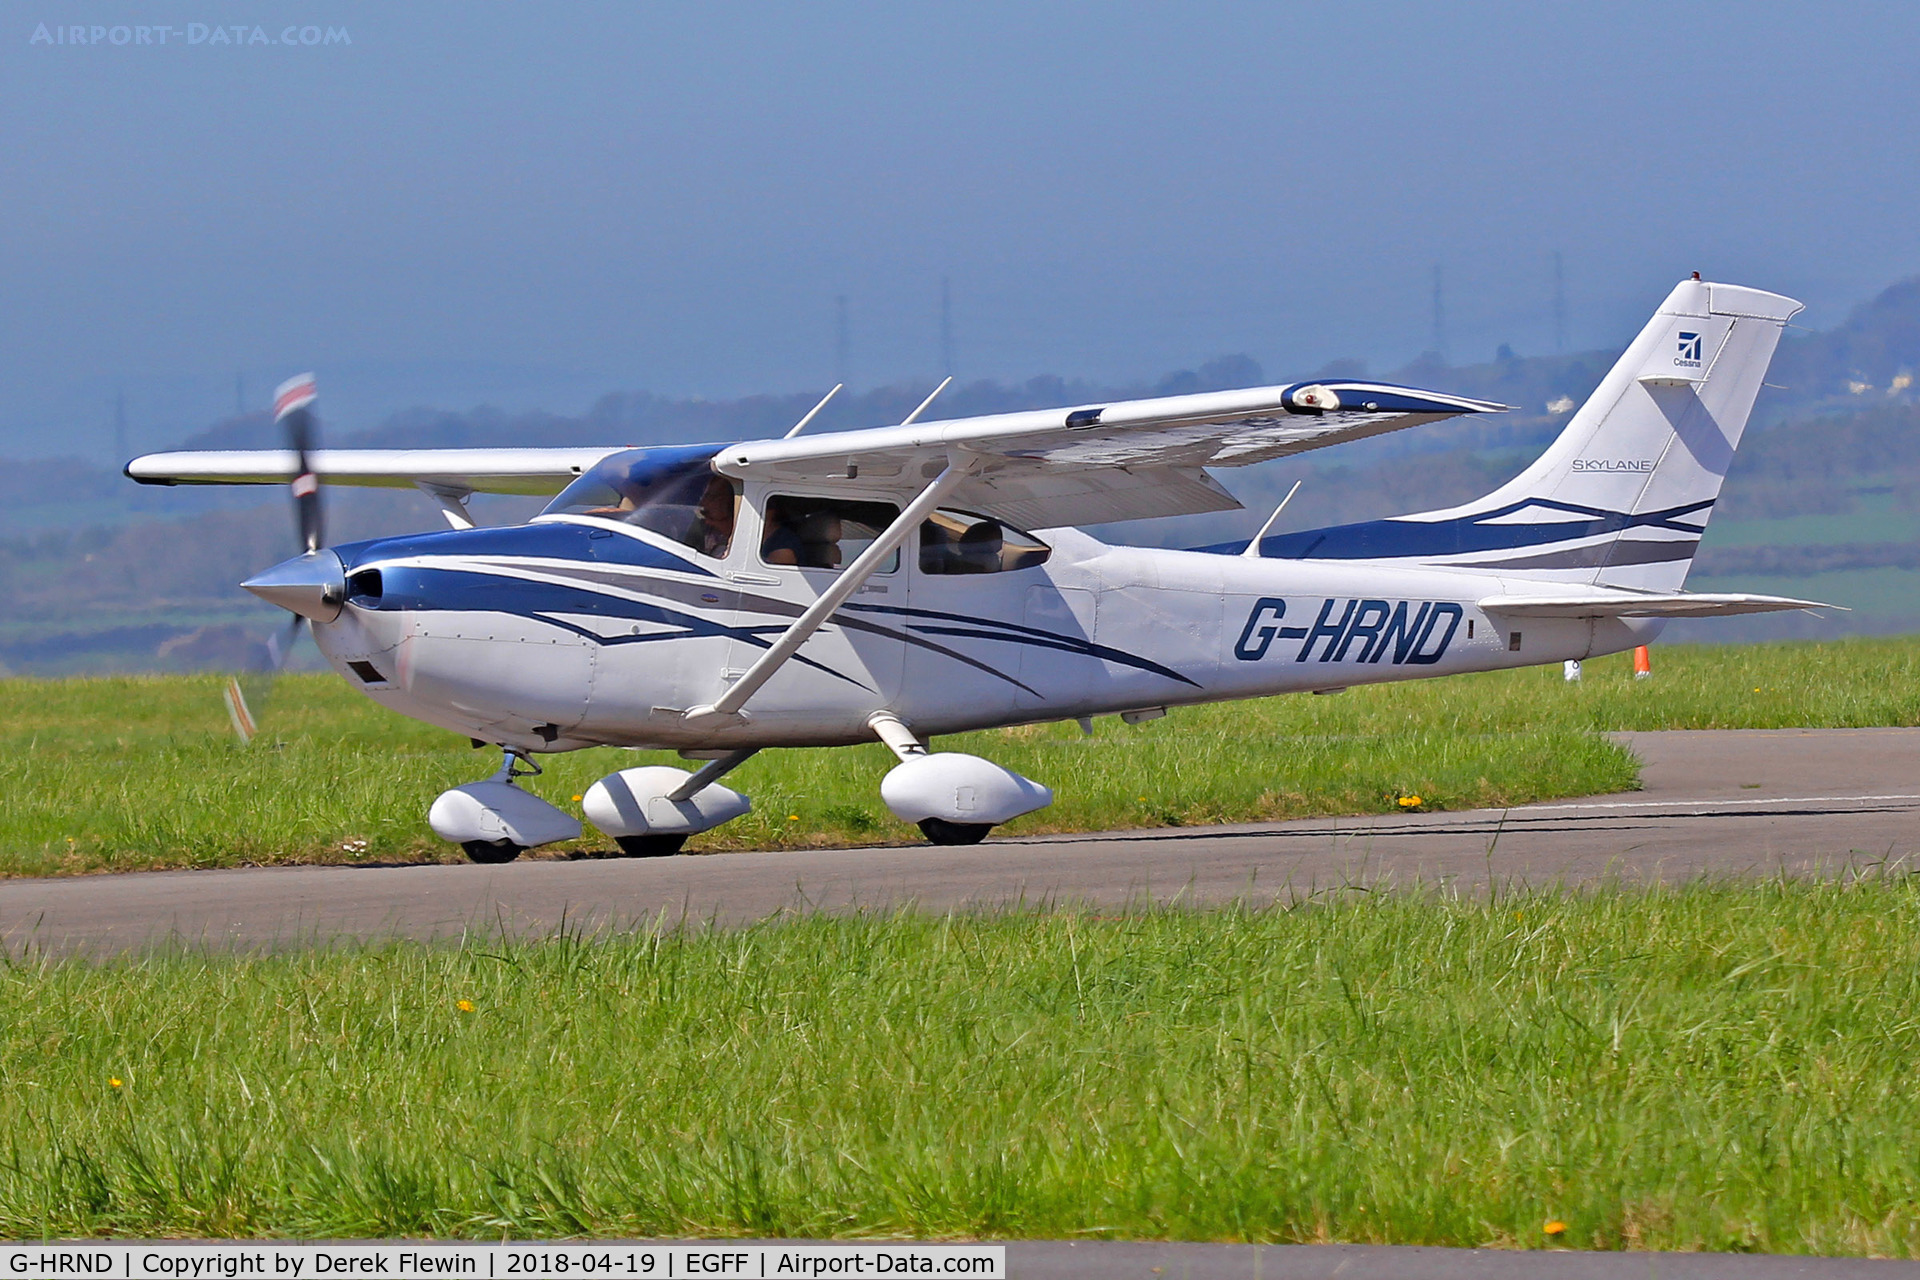 G-HRND, 2007 Cessna 182T Skylane C/N 18281936, Skylane, Denham based, seen shortly after landing on runway 30.